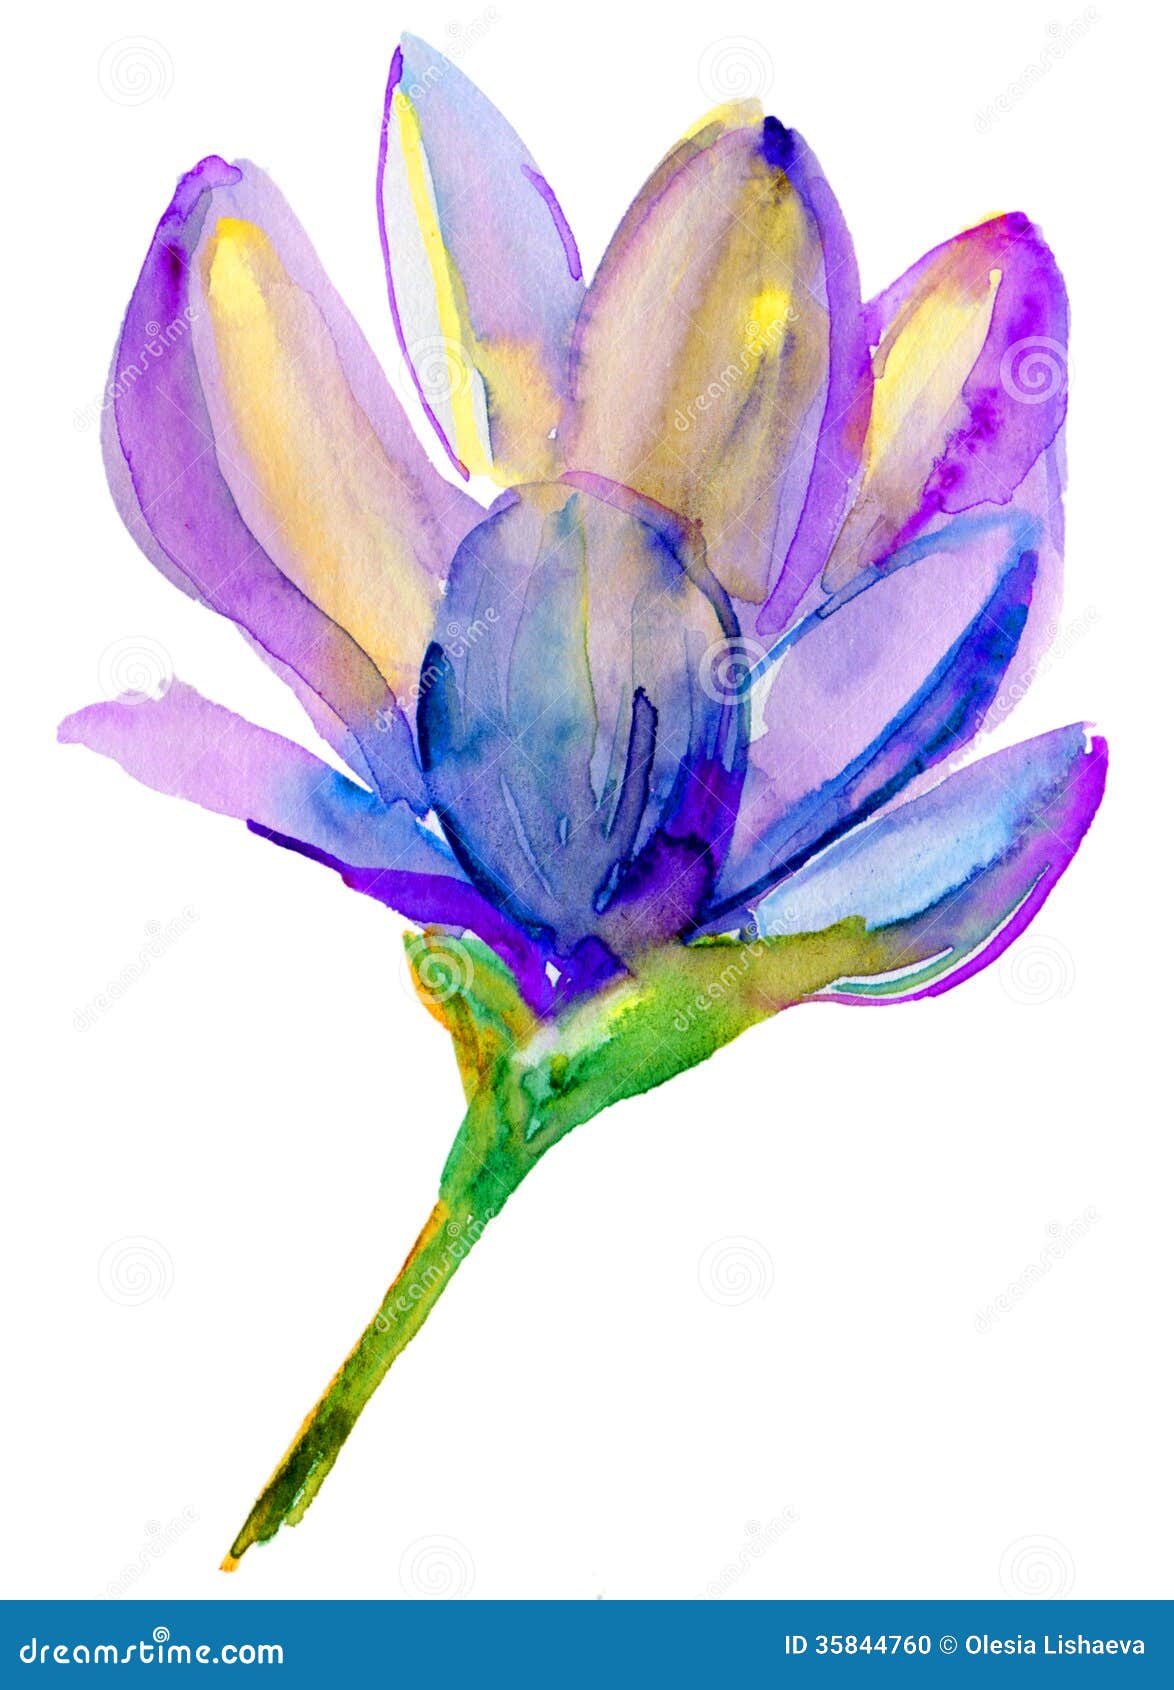 Decorative blue flower stock illustration. Illustration of decoration ...